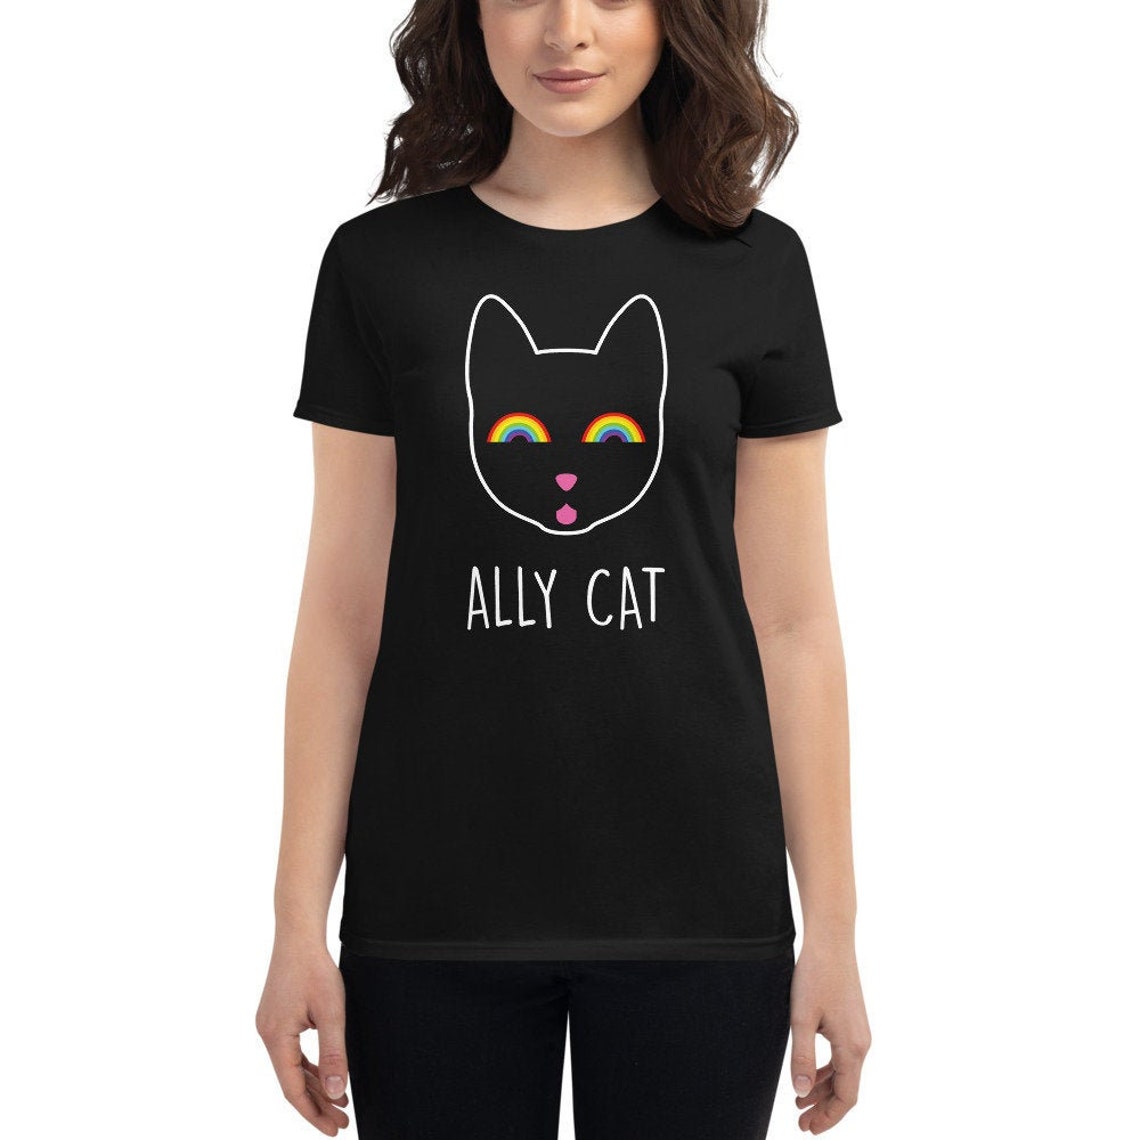 Ally Cat Shirt Ally AF Shirt Purride Shirt LGBT Ally - Etsy